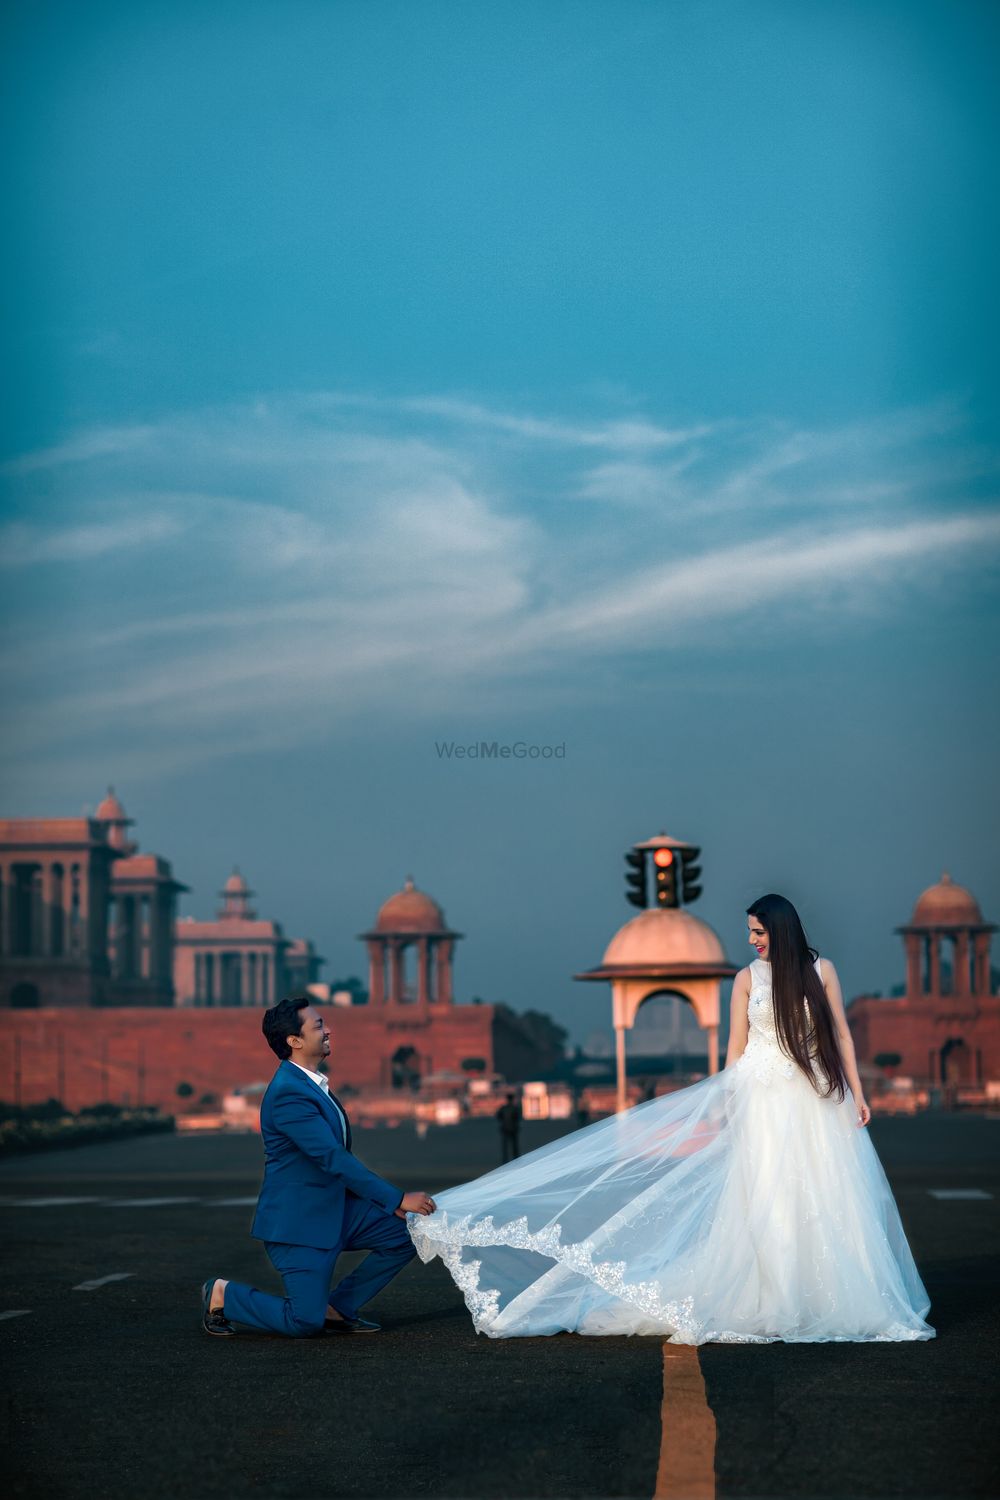 Photo By Sharique Sarwar Films Pvt. Ltd. - Pre Wedding Photographers